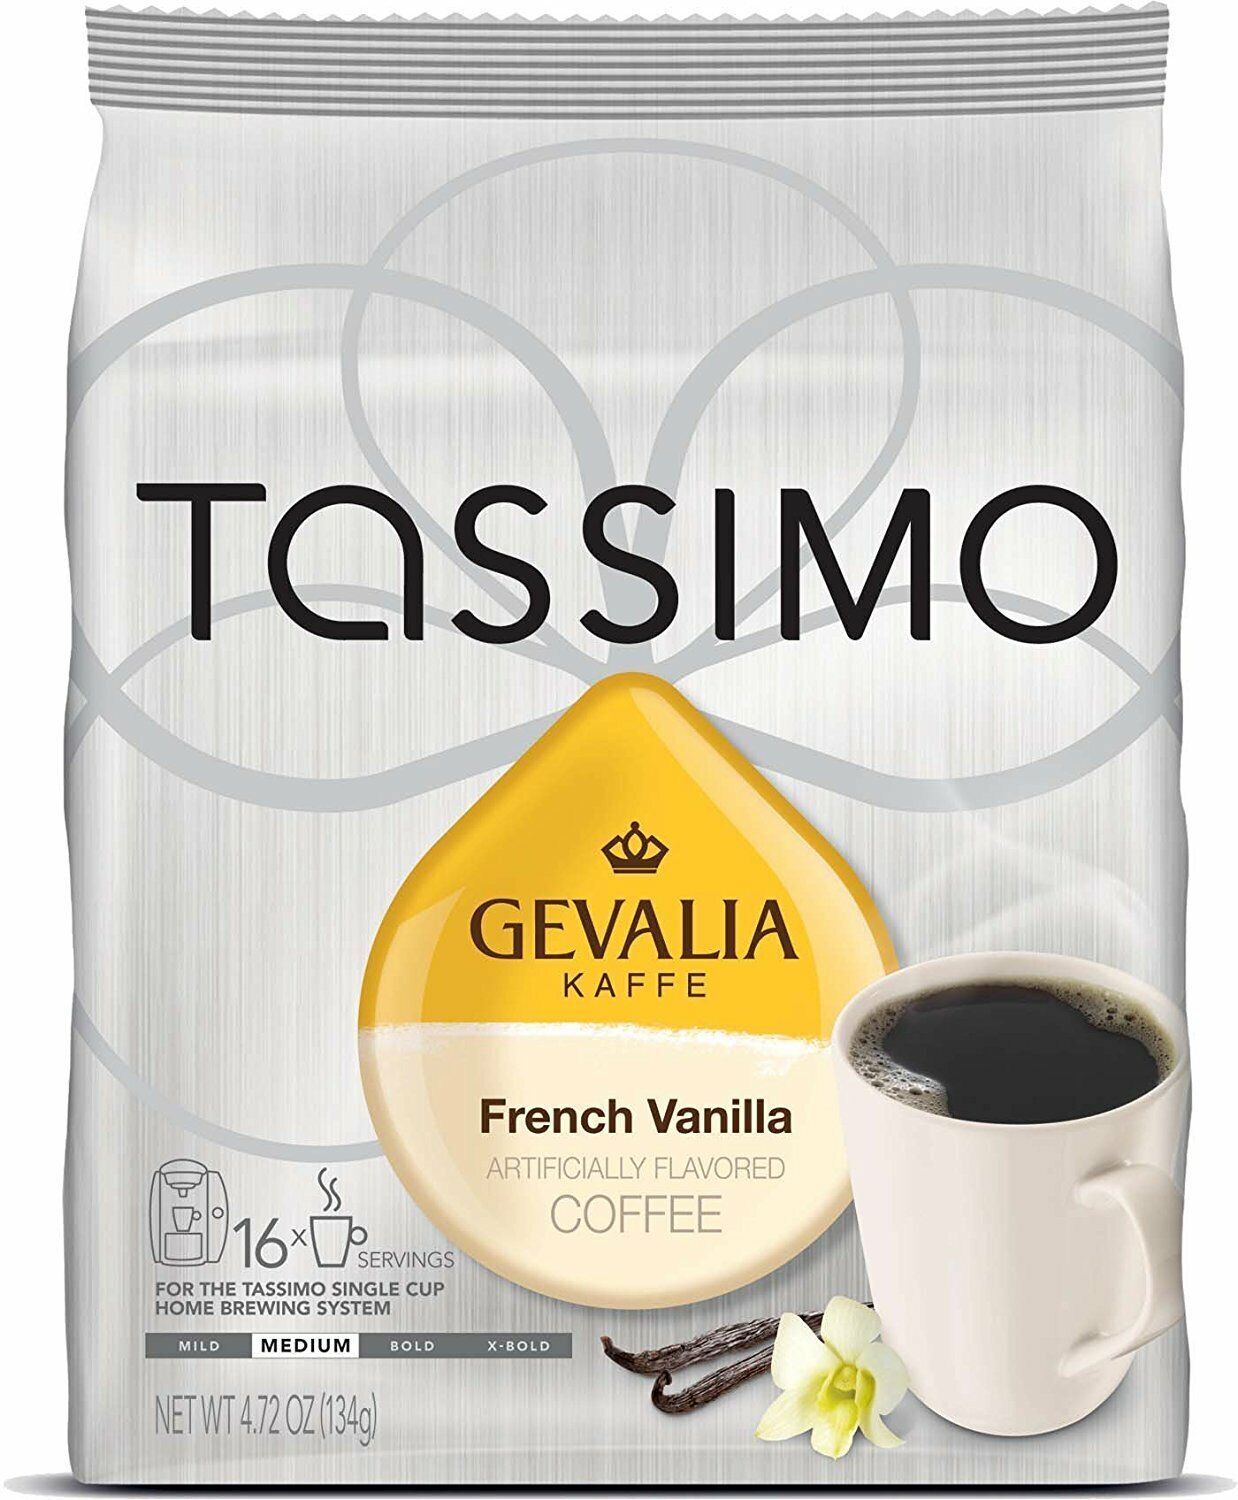 32ct Tdisc Tassimo Gevalia French Vanilla Coffee Brew 0222 Roast Gift FreeShip TASSIMO - фотография #3